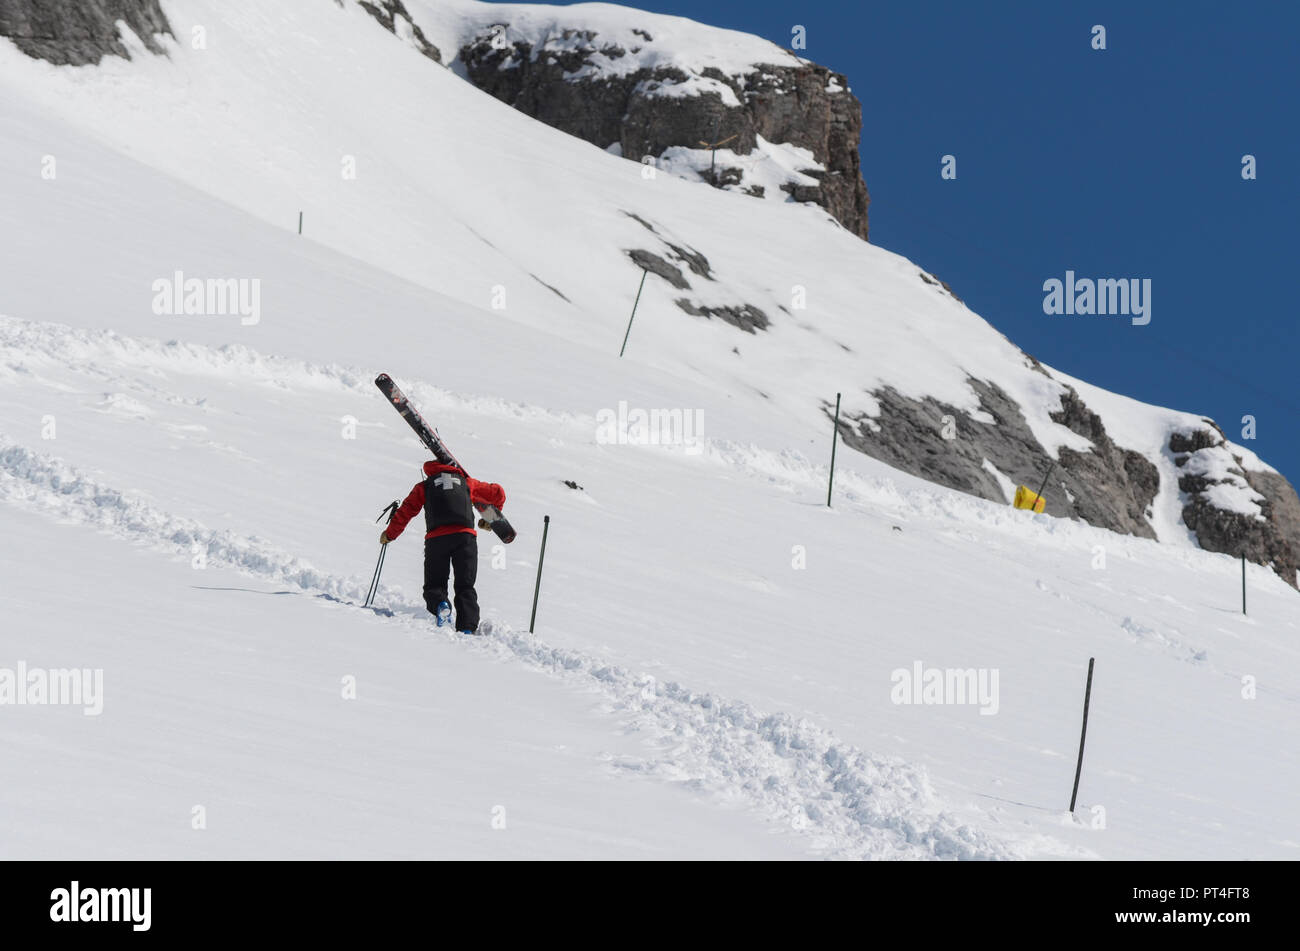 Ski patrol climbing up a mountain slope carrying large skis Stock Photo